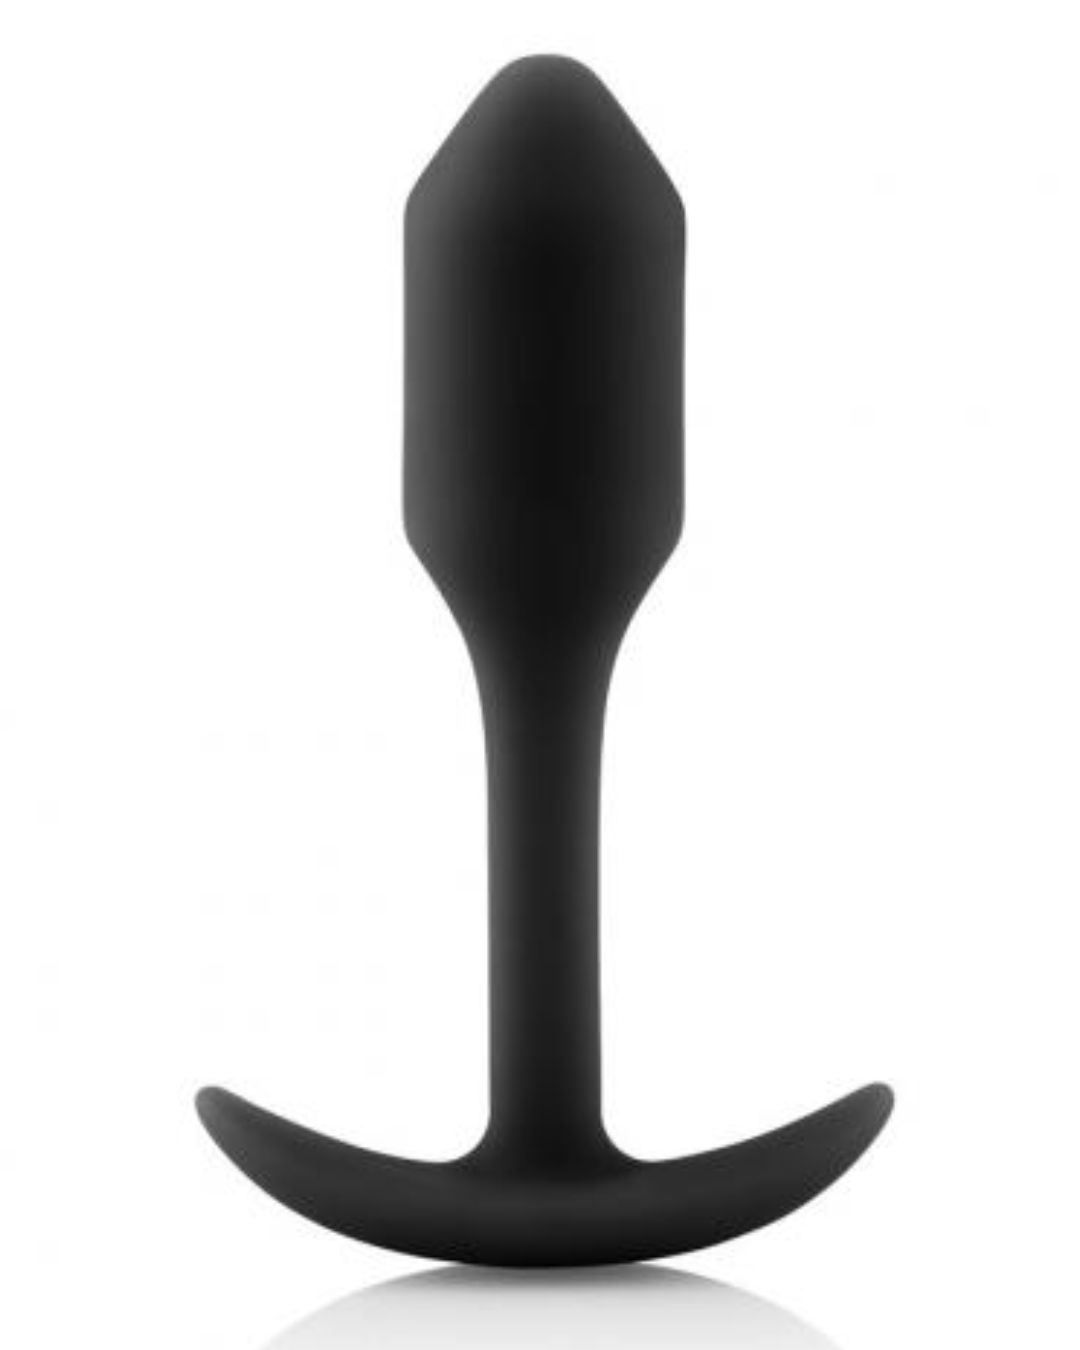 B-vibe Snug Plug 1 Weighted Silicone Butt Plug - 55 grams black